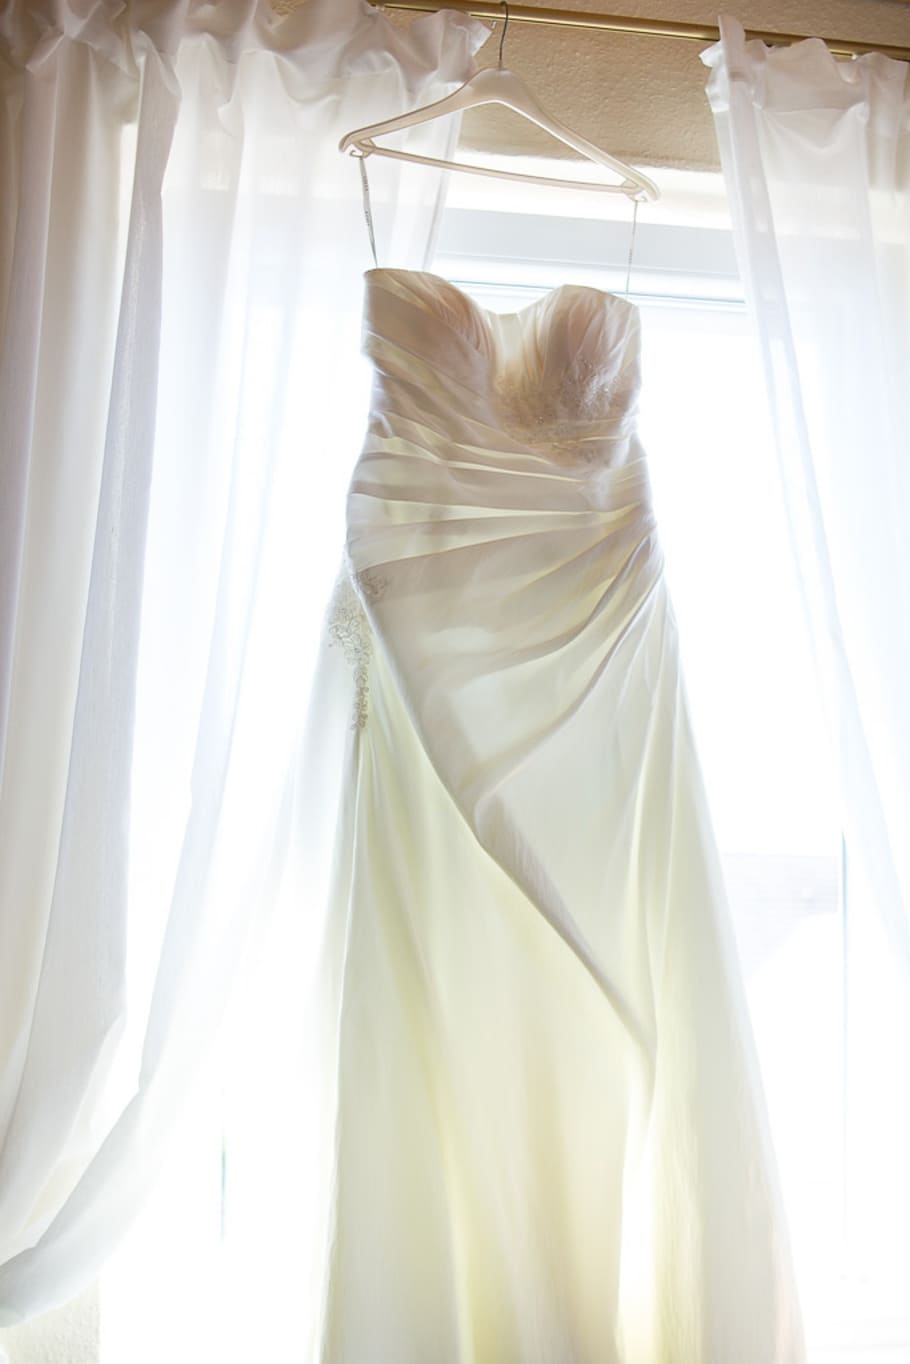 blanco, vestido de novia drapeado, colgar, percha, cortinas de ventana, boda, vestido, cortina, matrimonio, ventana